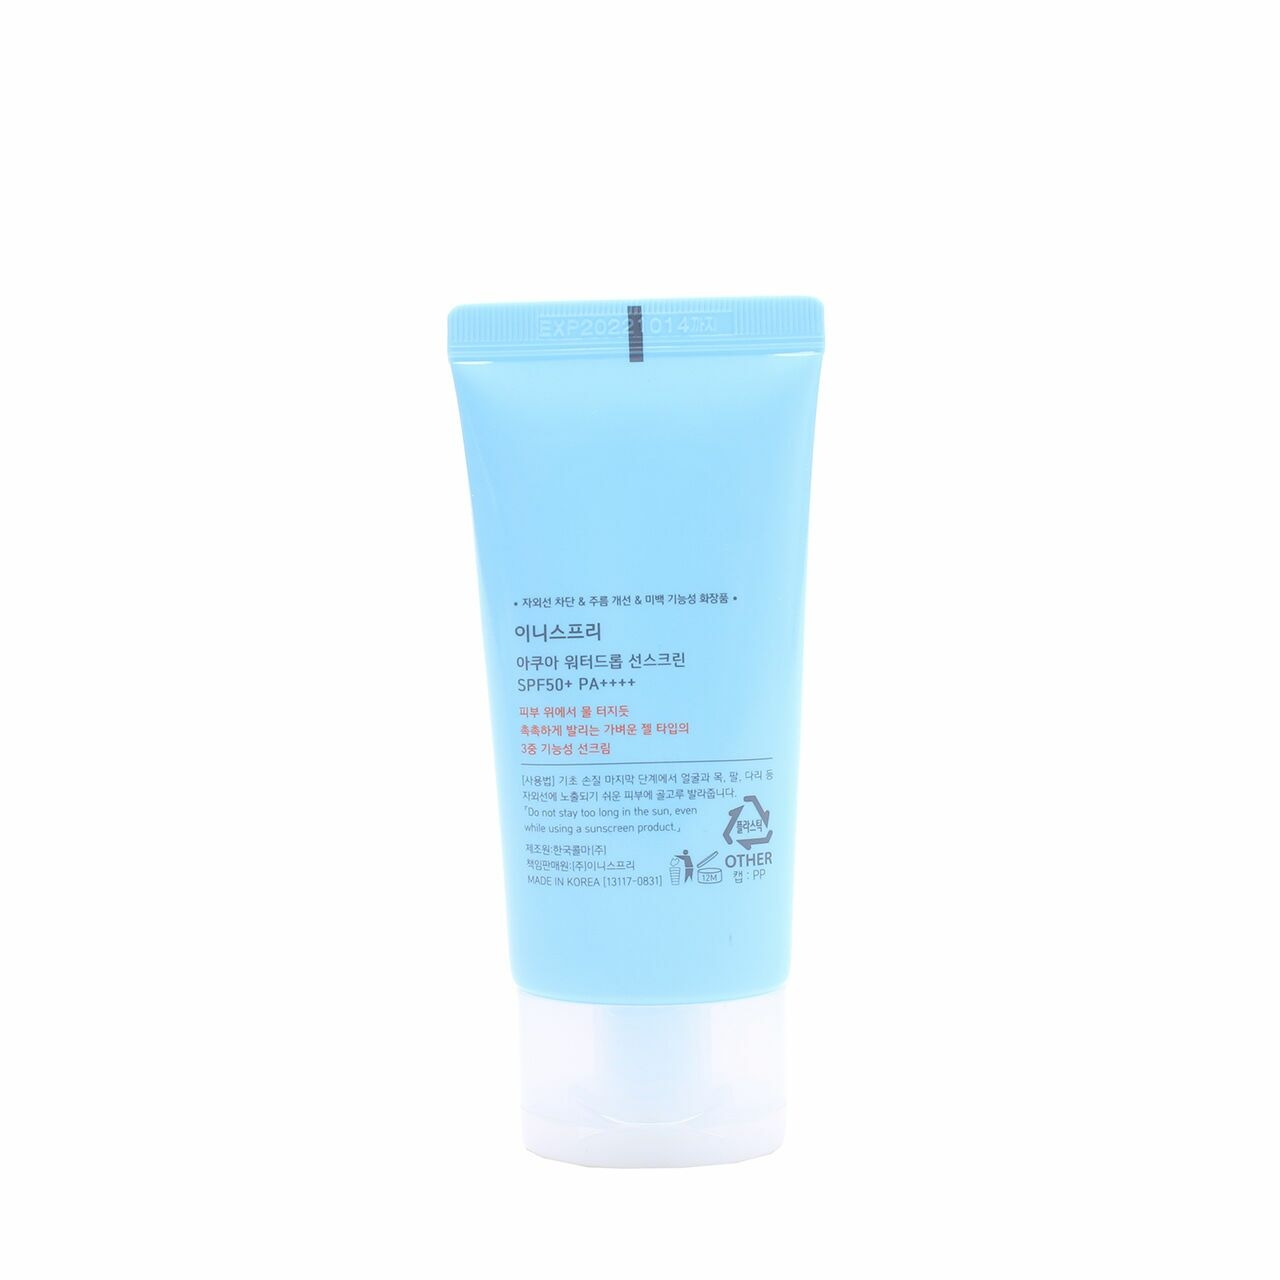 Innisfree Aqua Water Drop Sunscreen SPF50+ PA++++ Faces